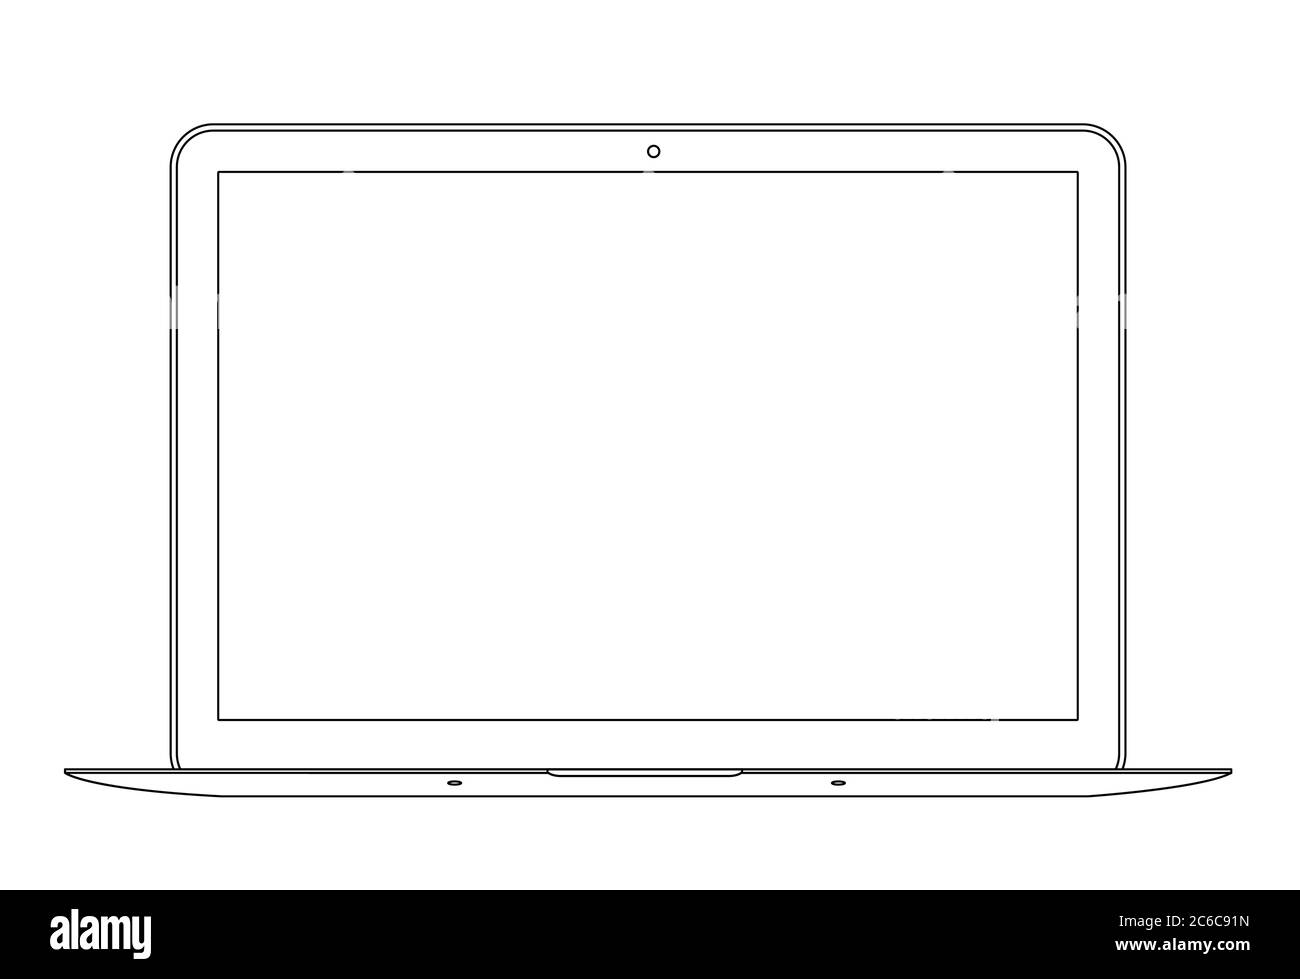 Laptop con disegno a linee. Elegante design sottile. Illustrazione vettoriale Illustrazione Vettoriale